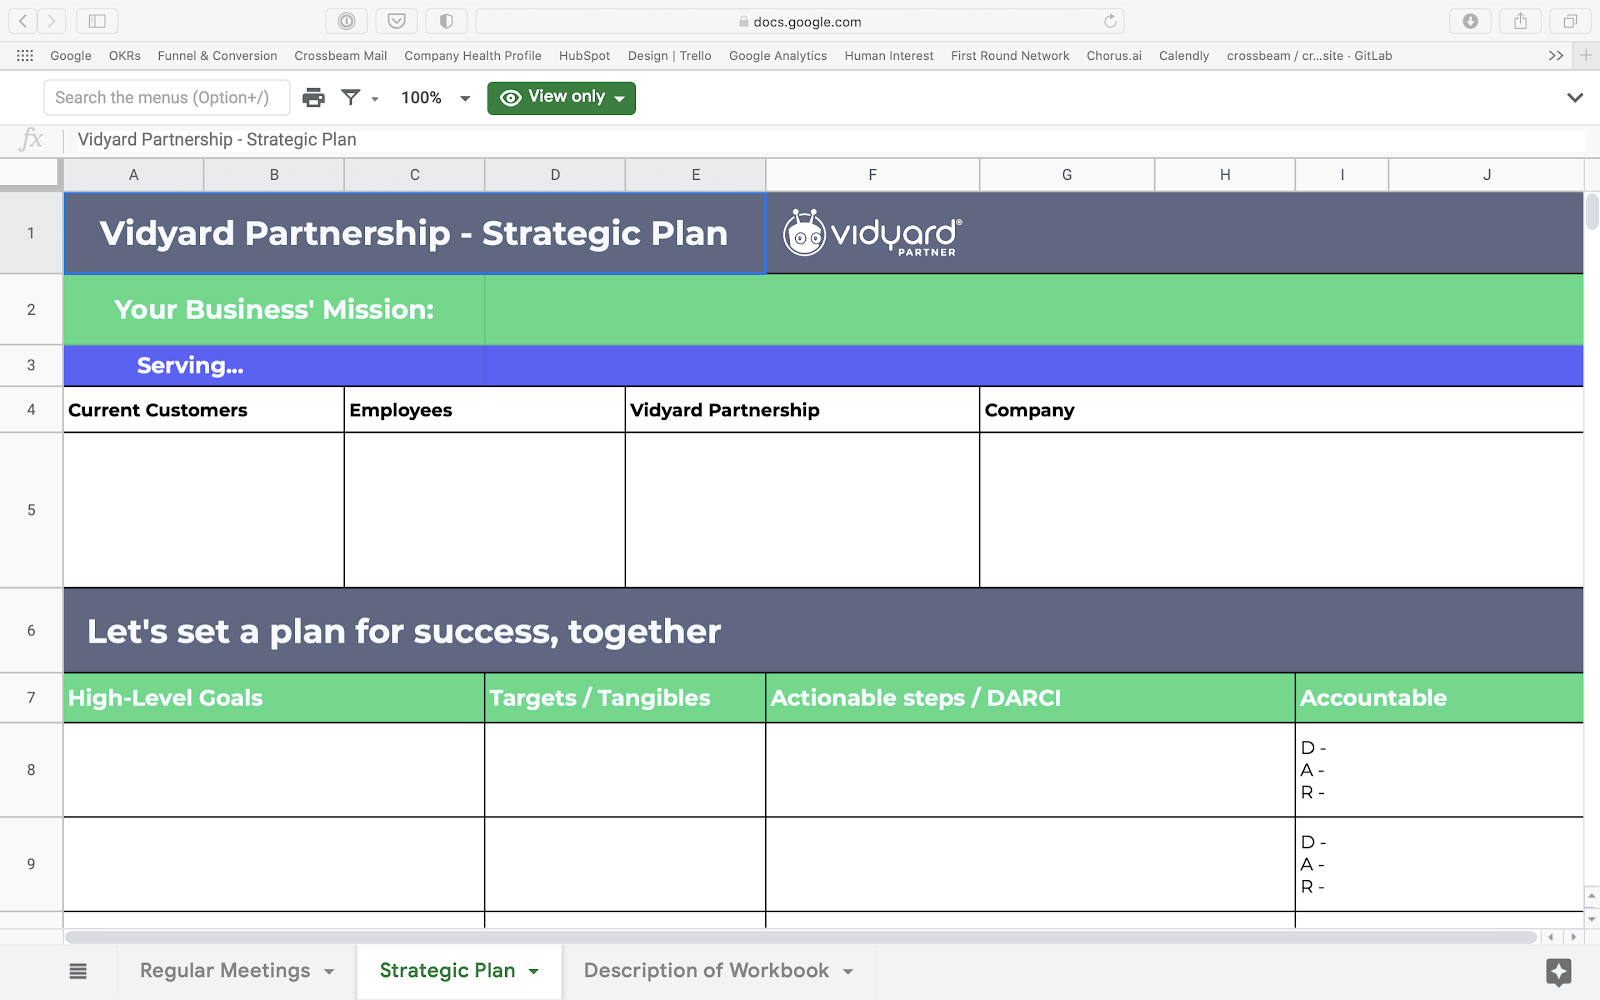 Vidyard partnership strategic plan